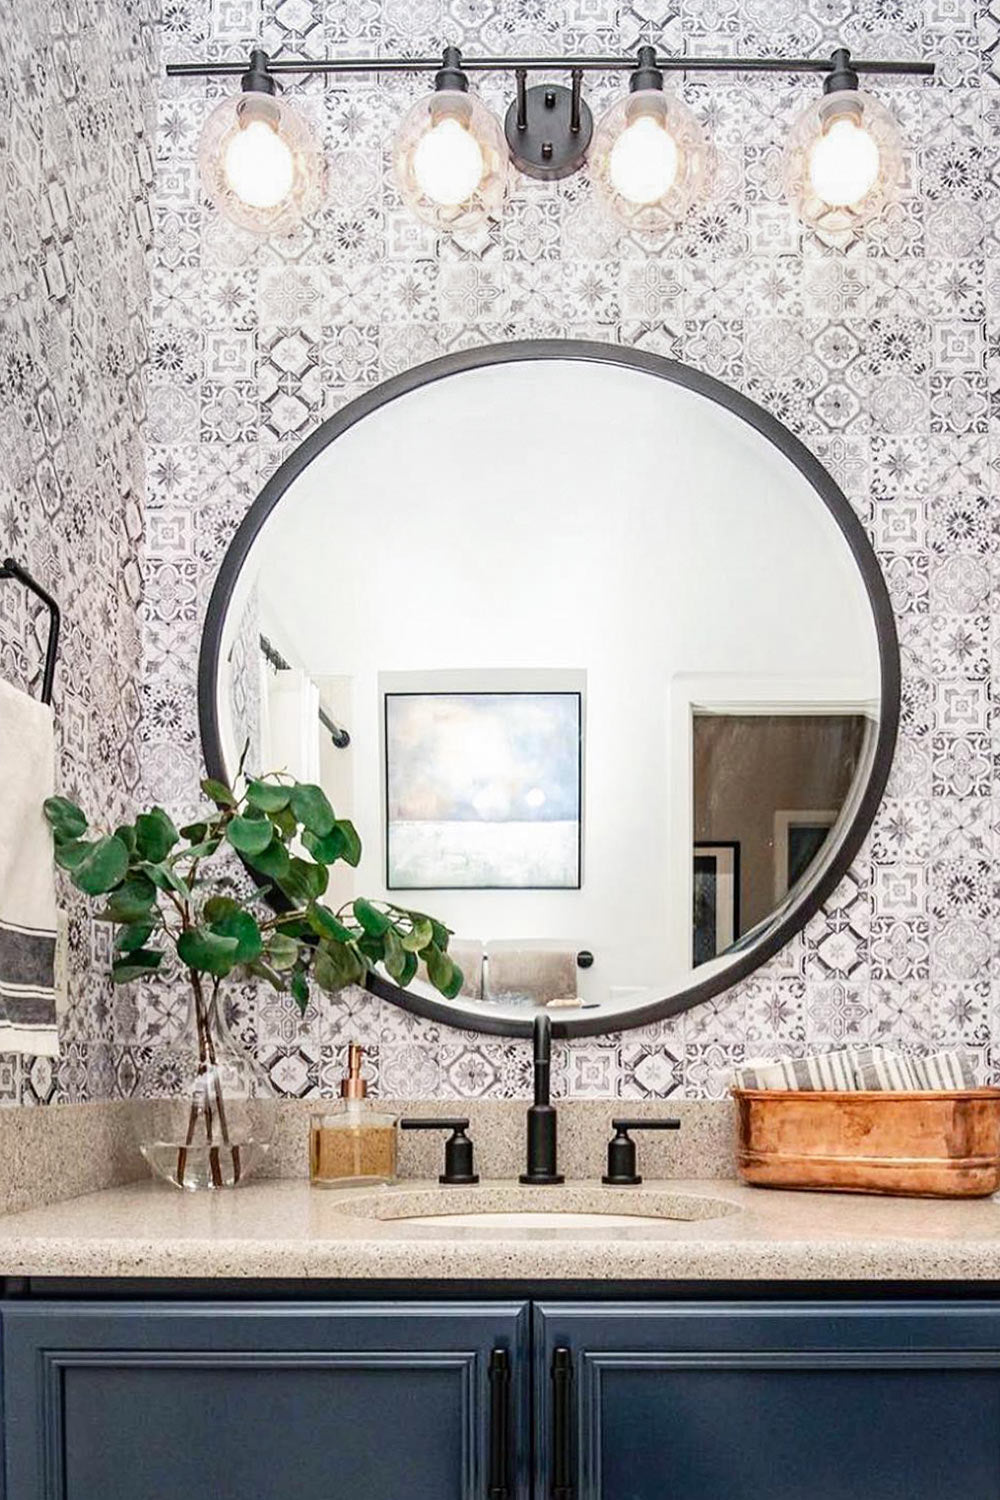 Monochrome Tile Removable Wallpaper Bathroom Interior